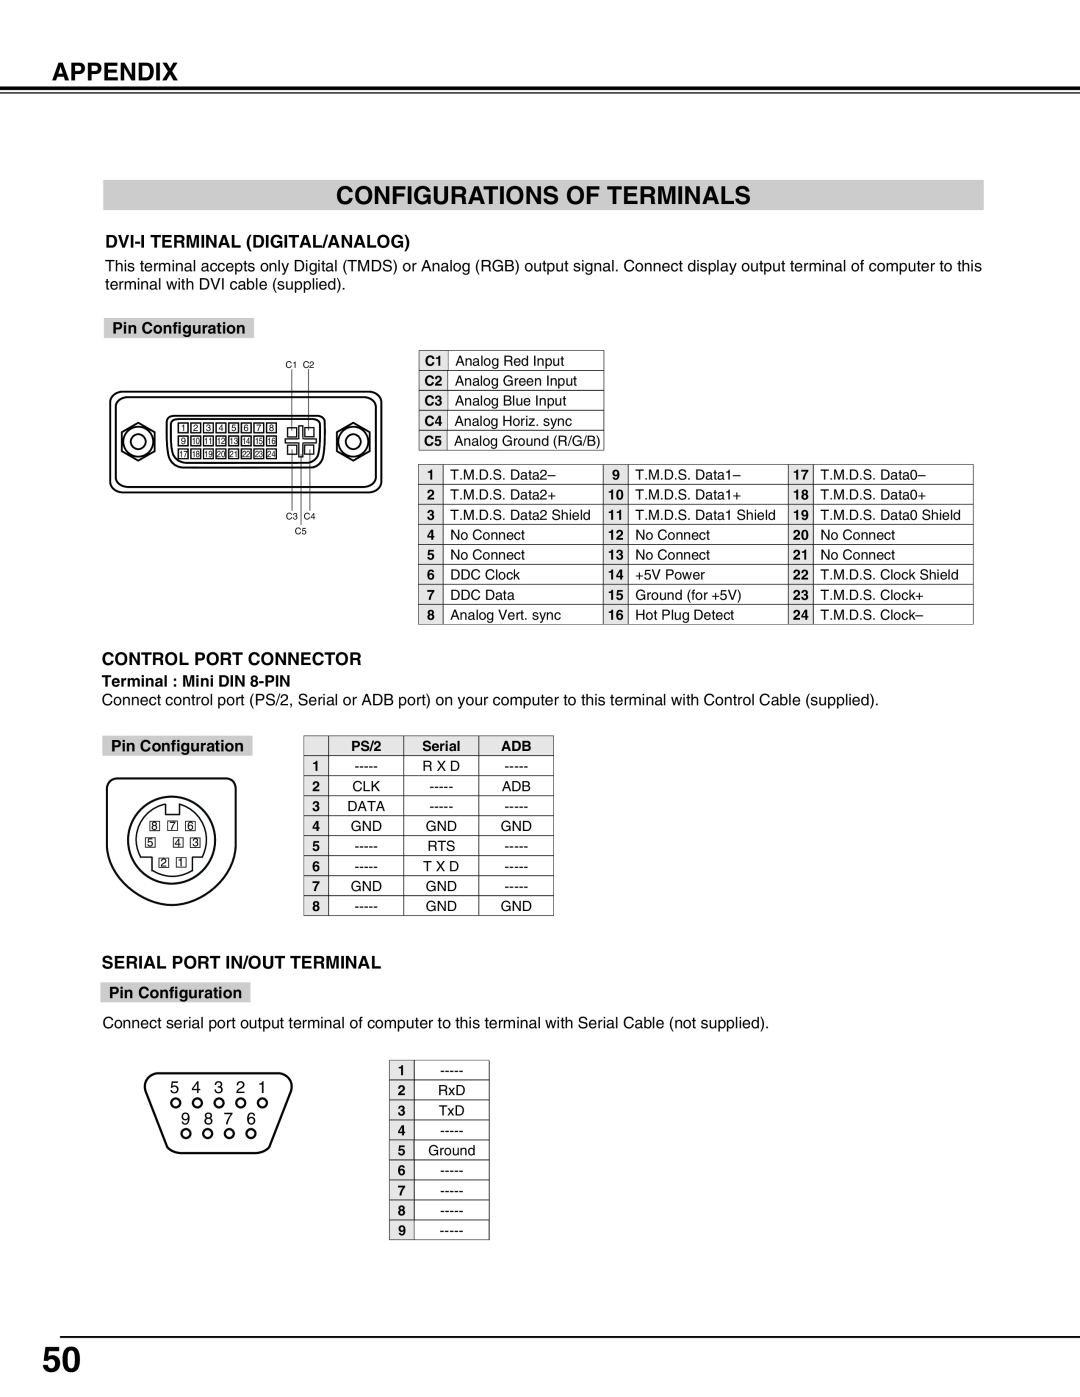 Eiki LC-SX4LA Appendix Configurations Of Terminals, Dvi-I Terminal Digital/Analog, Control Port Connector 